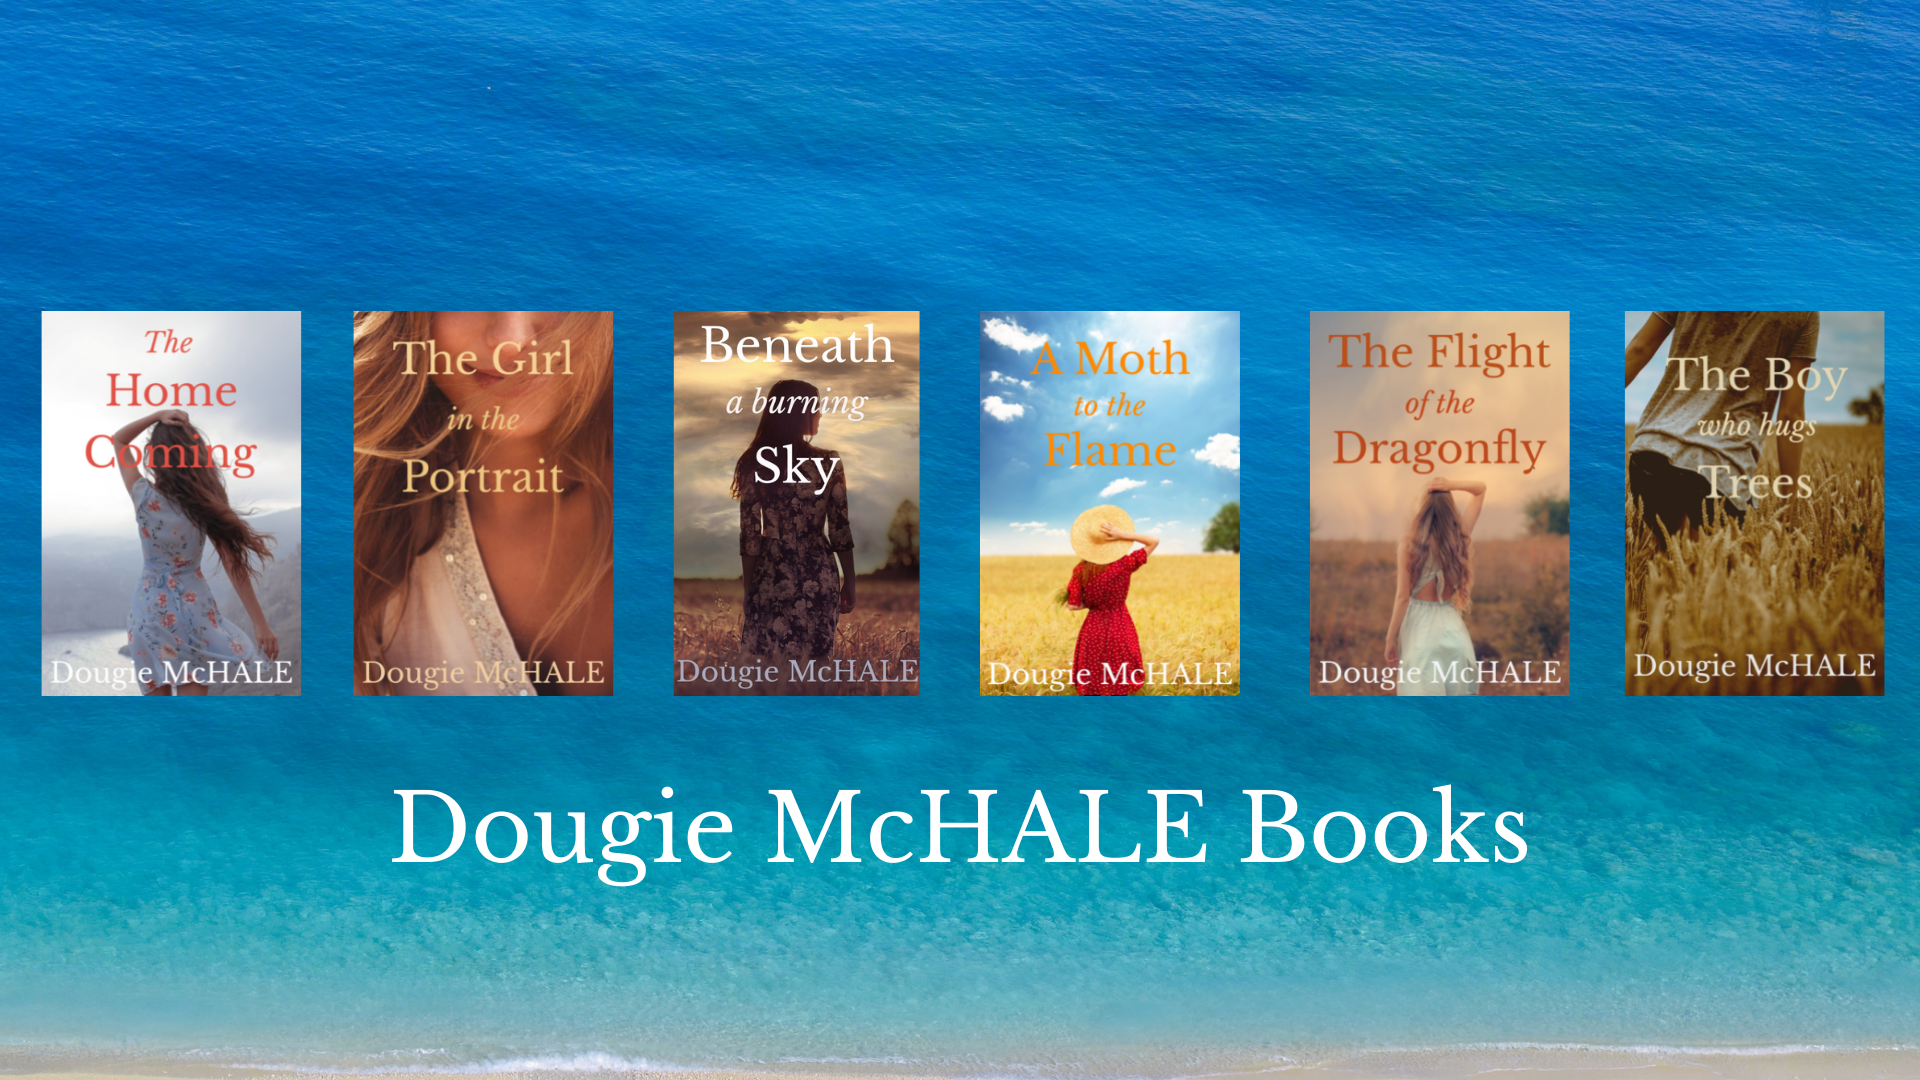 Dougie McHALE recent books